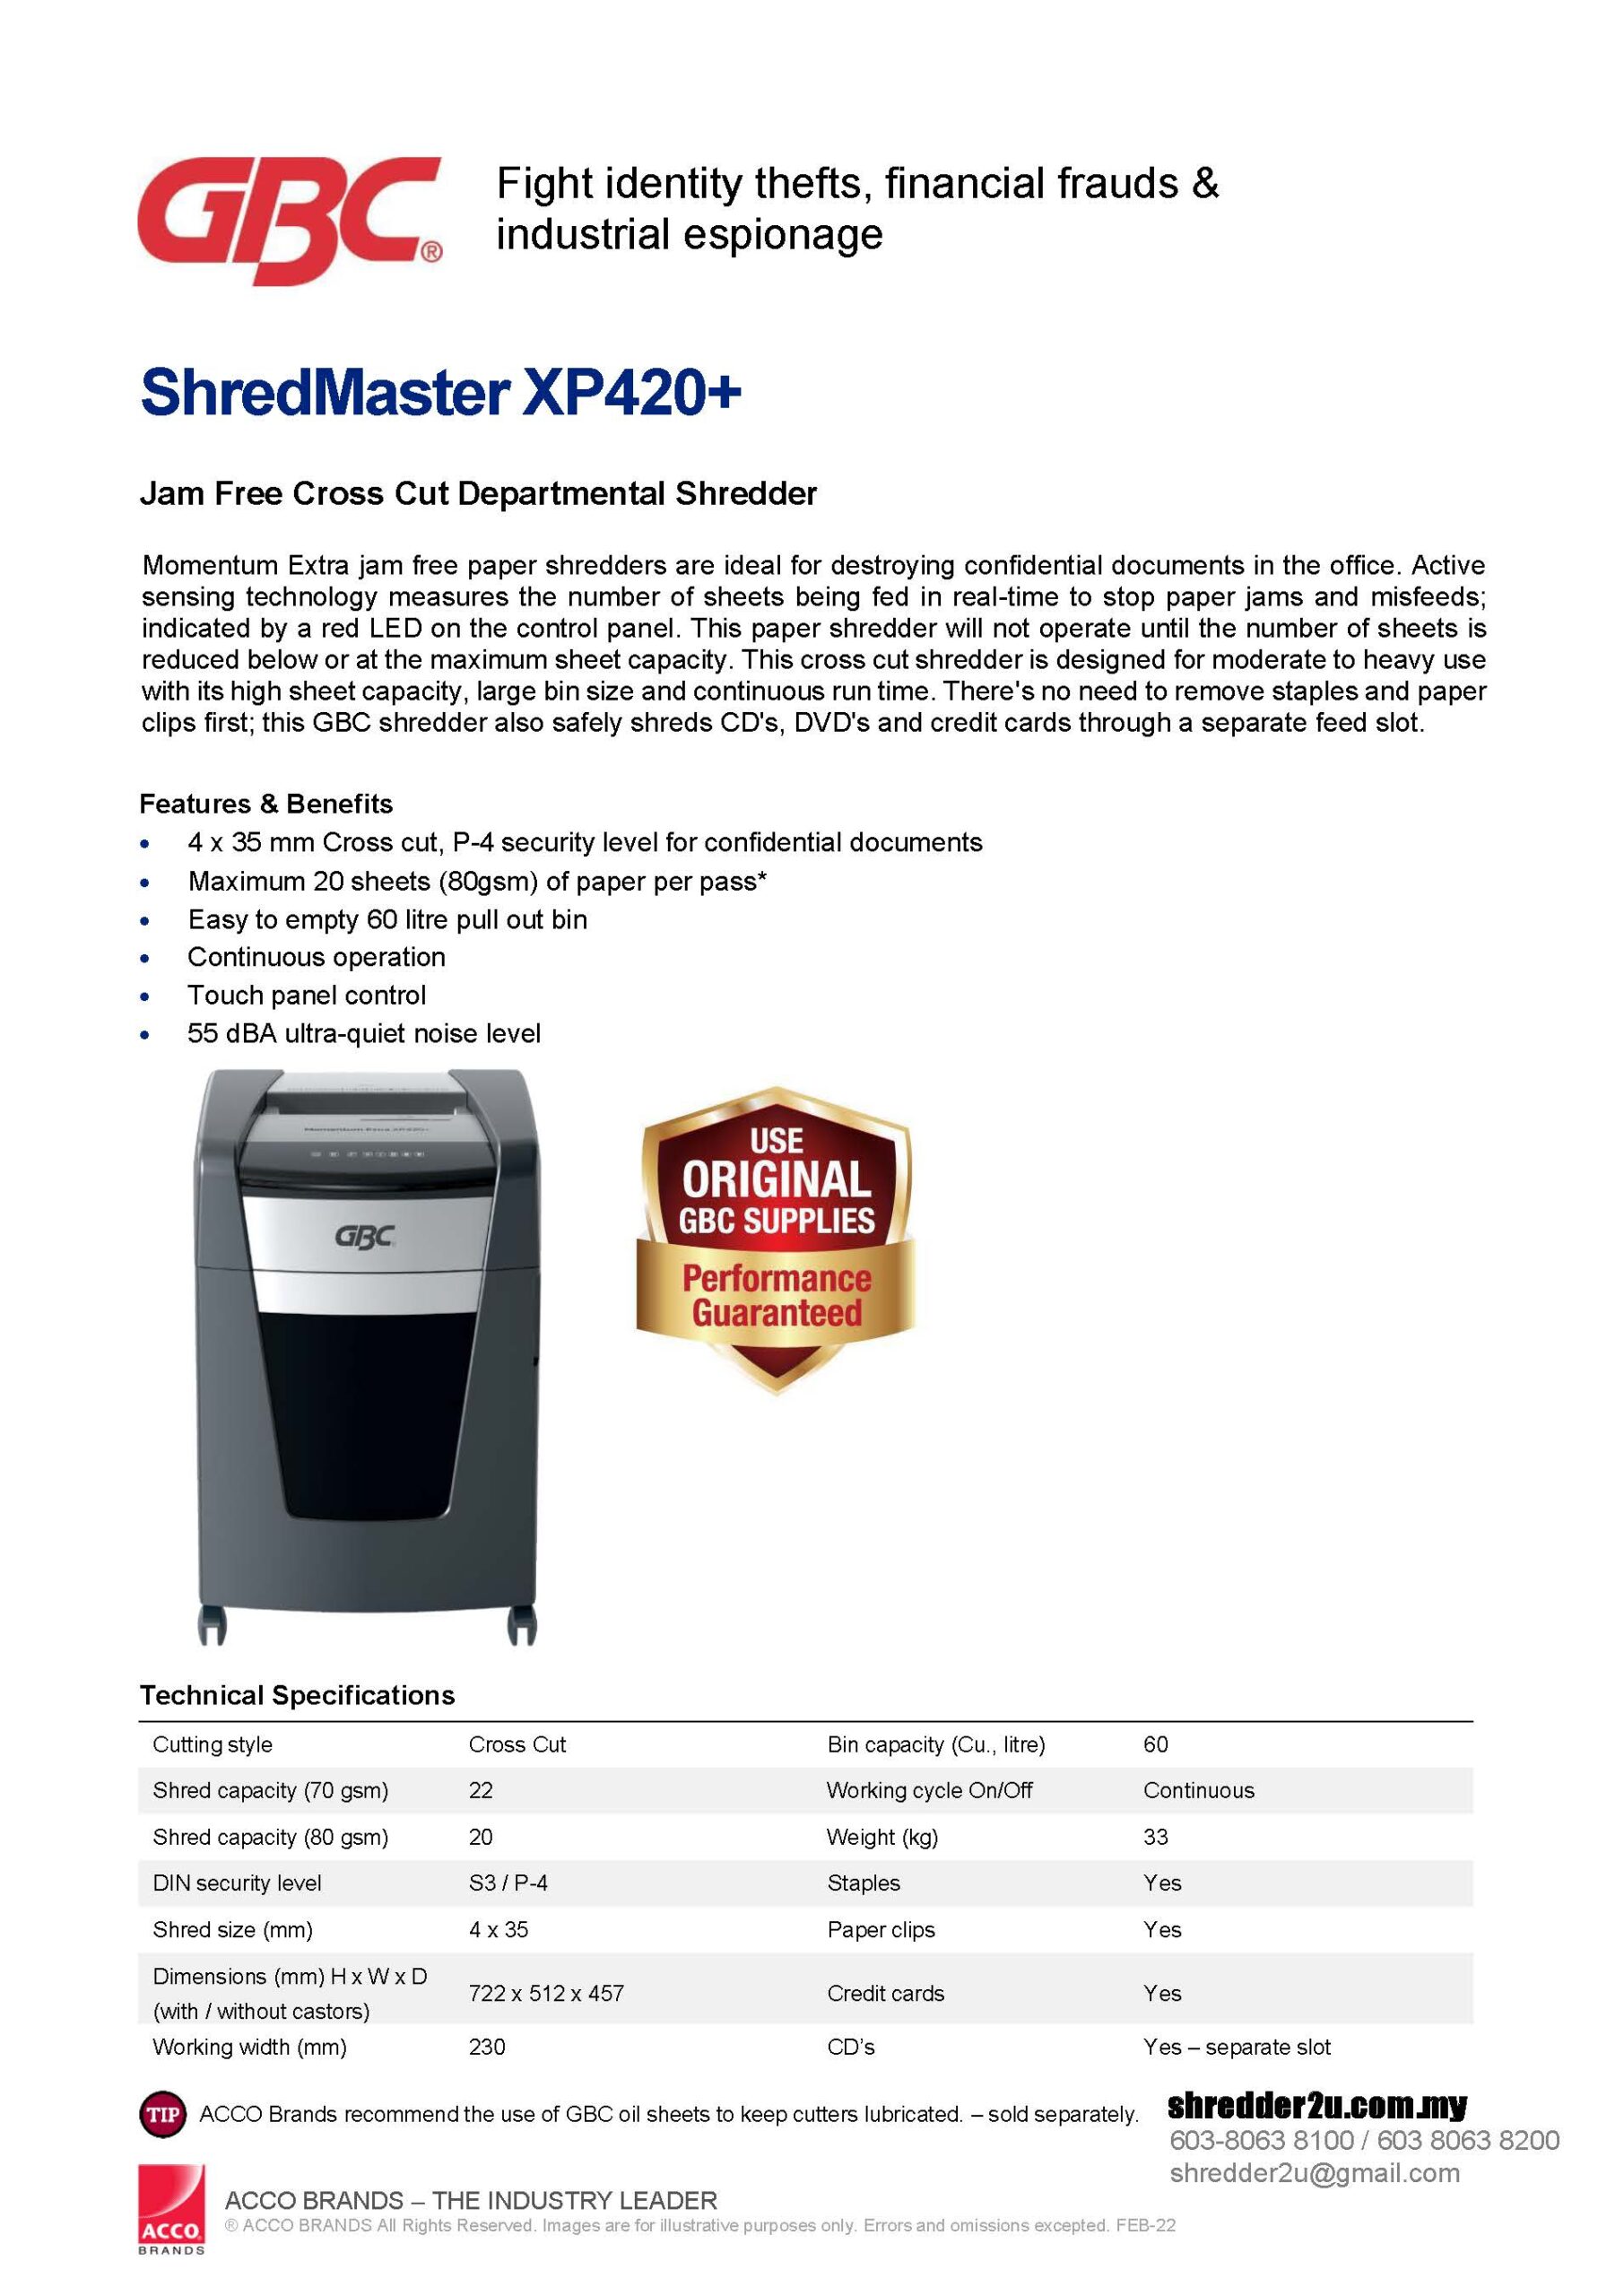 GBC hredMaster XP420 datasheet